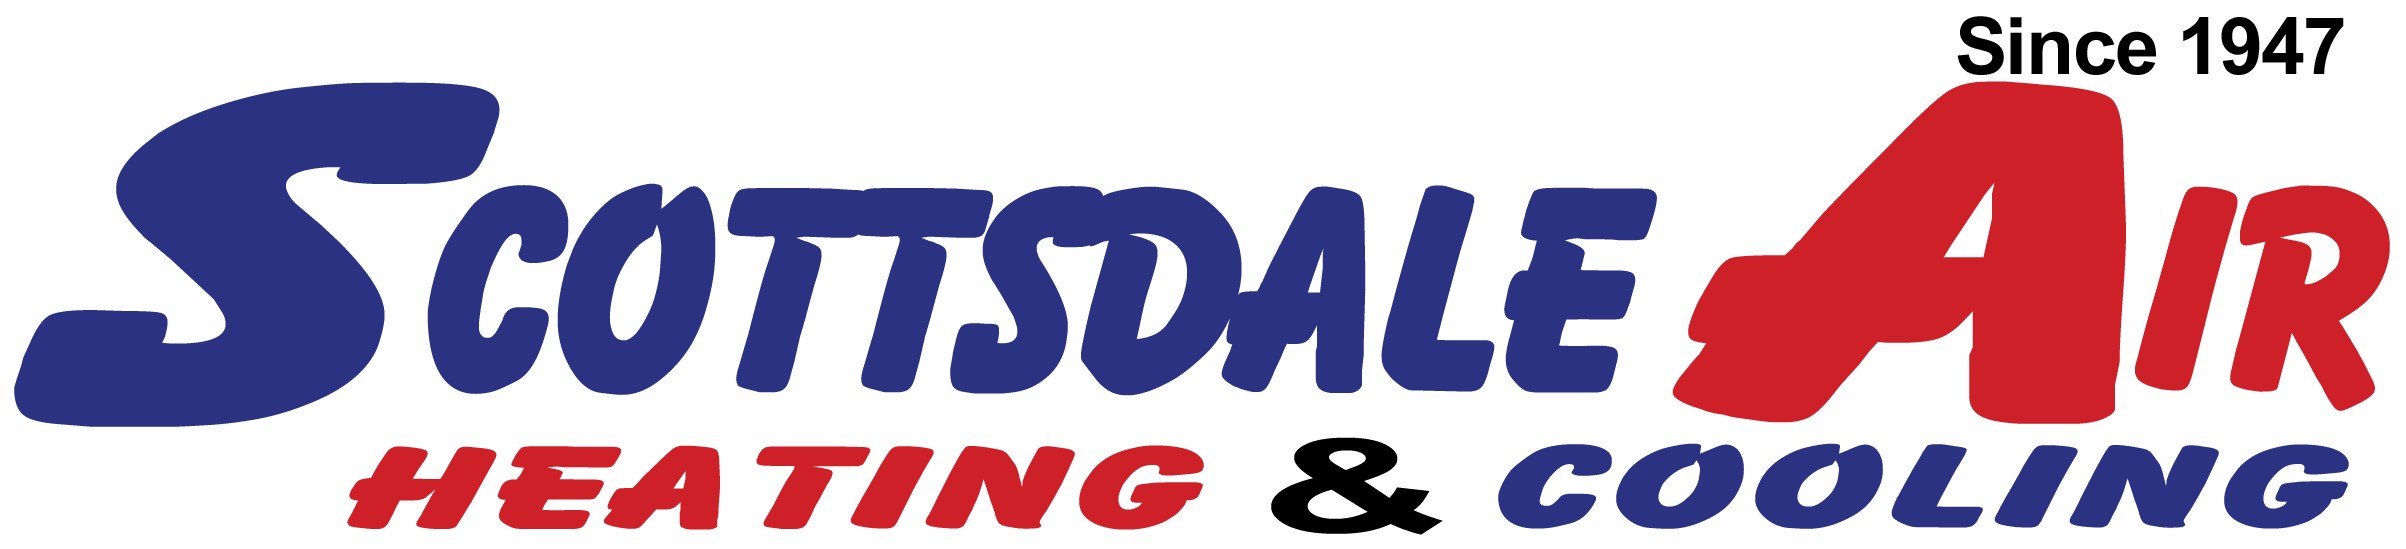 Scottsdale Air Heating & Cooling Logo